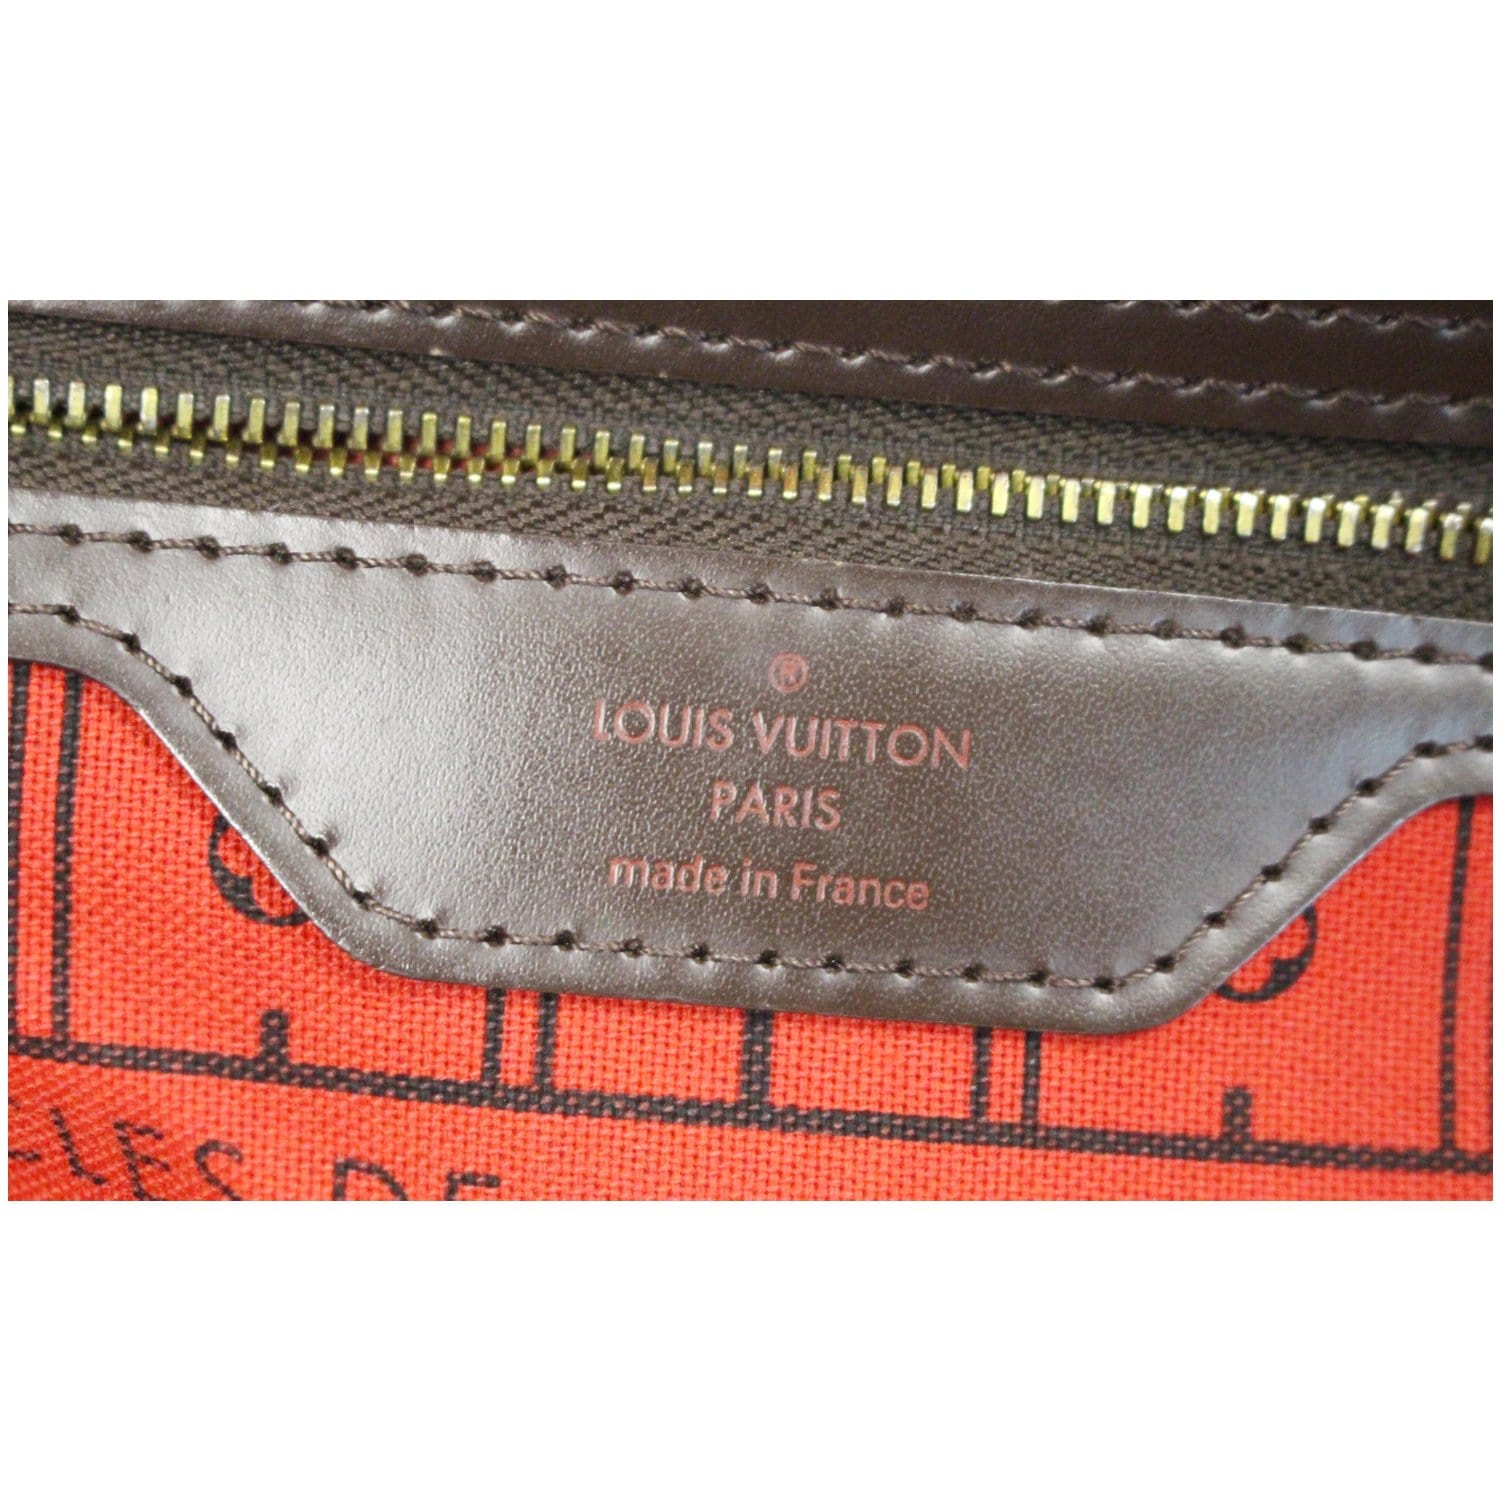 Louis Vuitton Neverfull PM Damier Ebene Tote Shoulder Bag